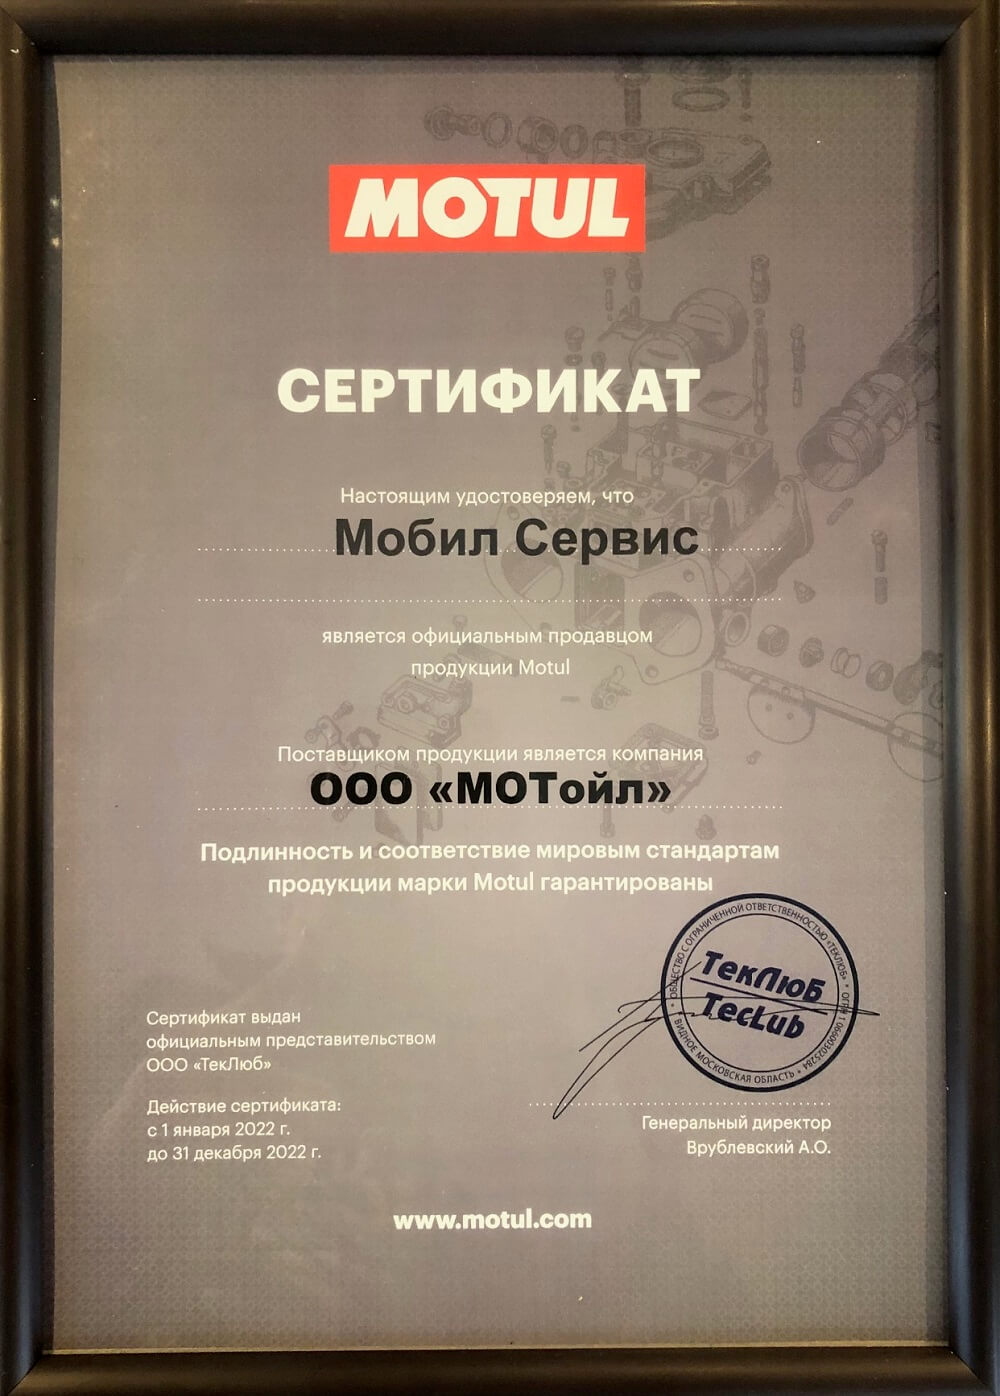 Сертификат MOTUL для Мобил Сервис